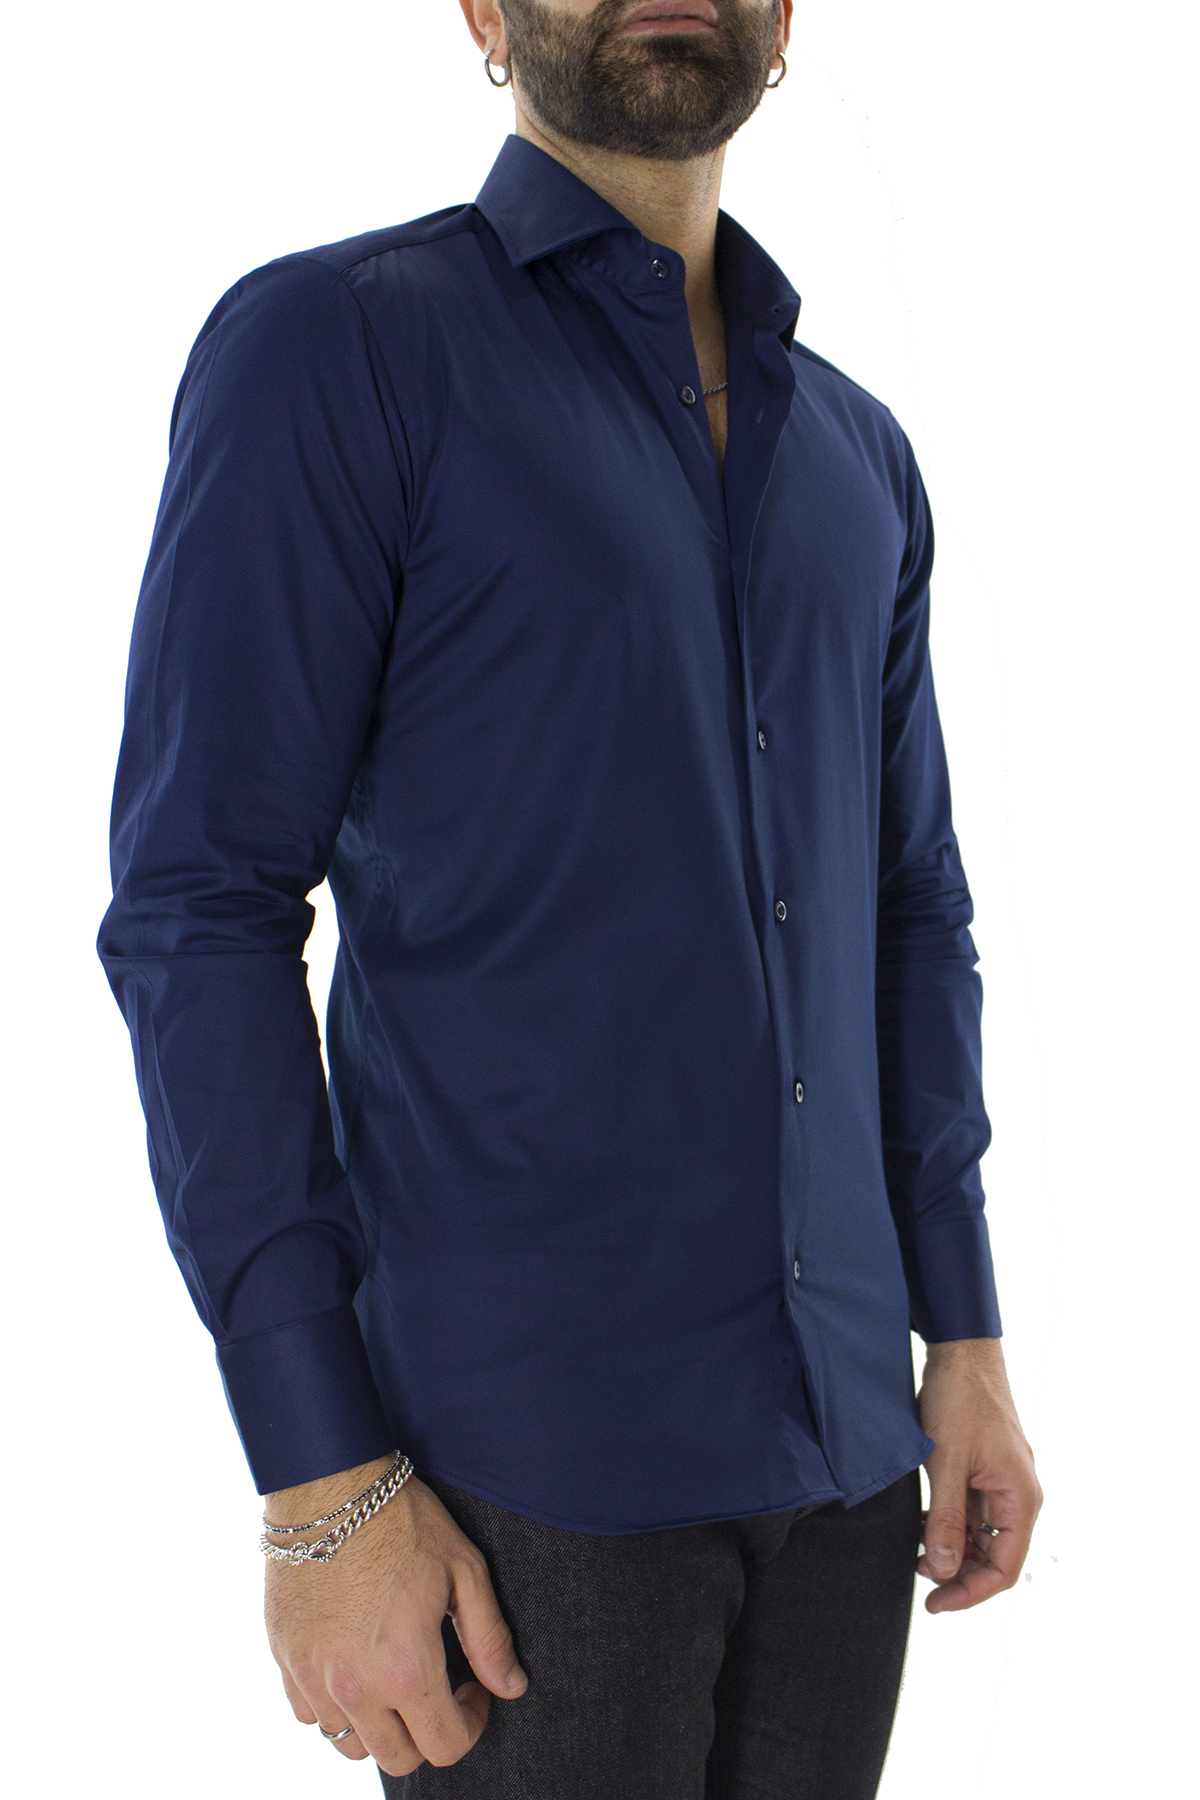 Amichi Camicia Blu/Blu navy M sconto 59% MODA UOMO Camicie & T-shirt Regular fit 